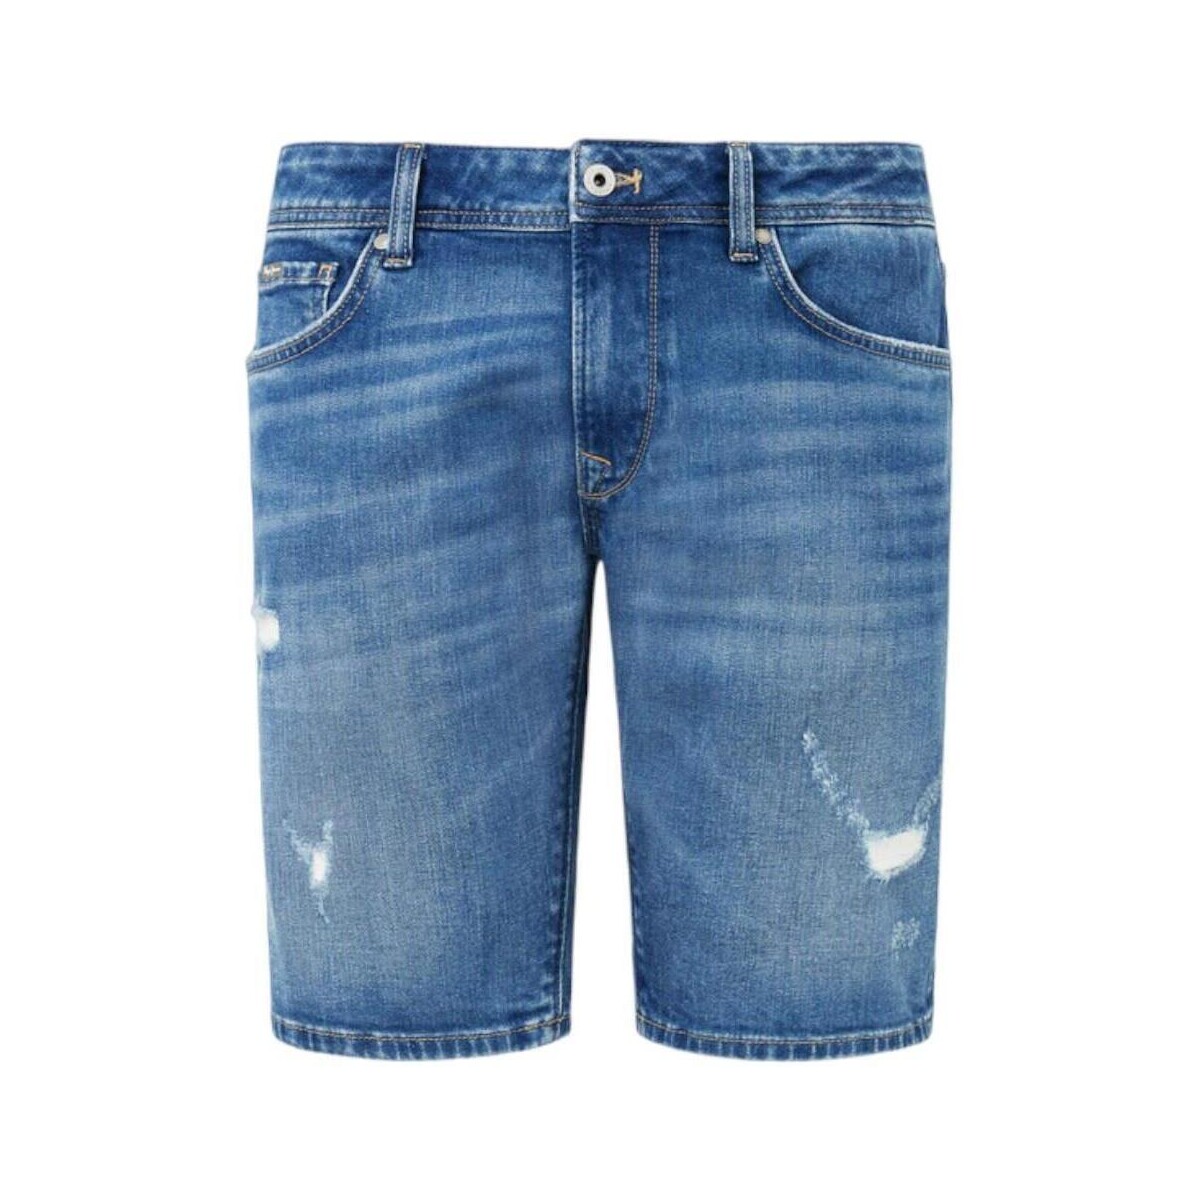 textil Herr Shorts / Bermudas Pepe jeans  Blå